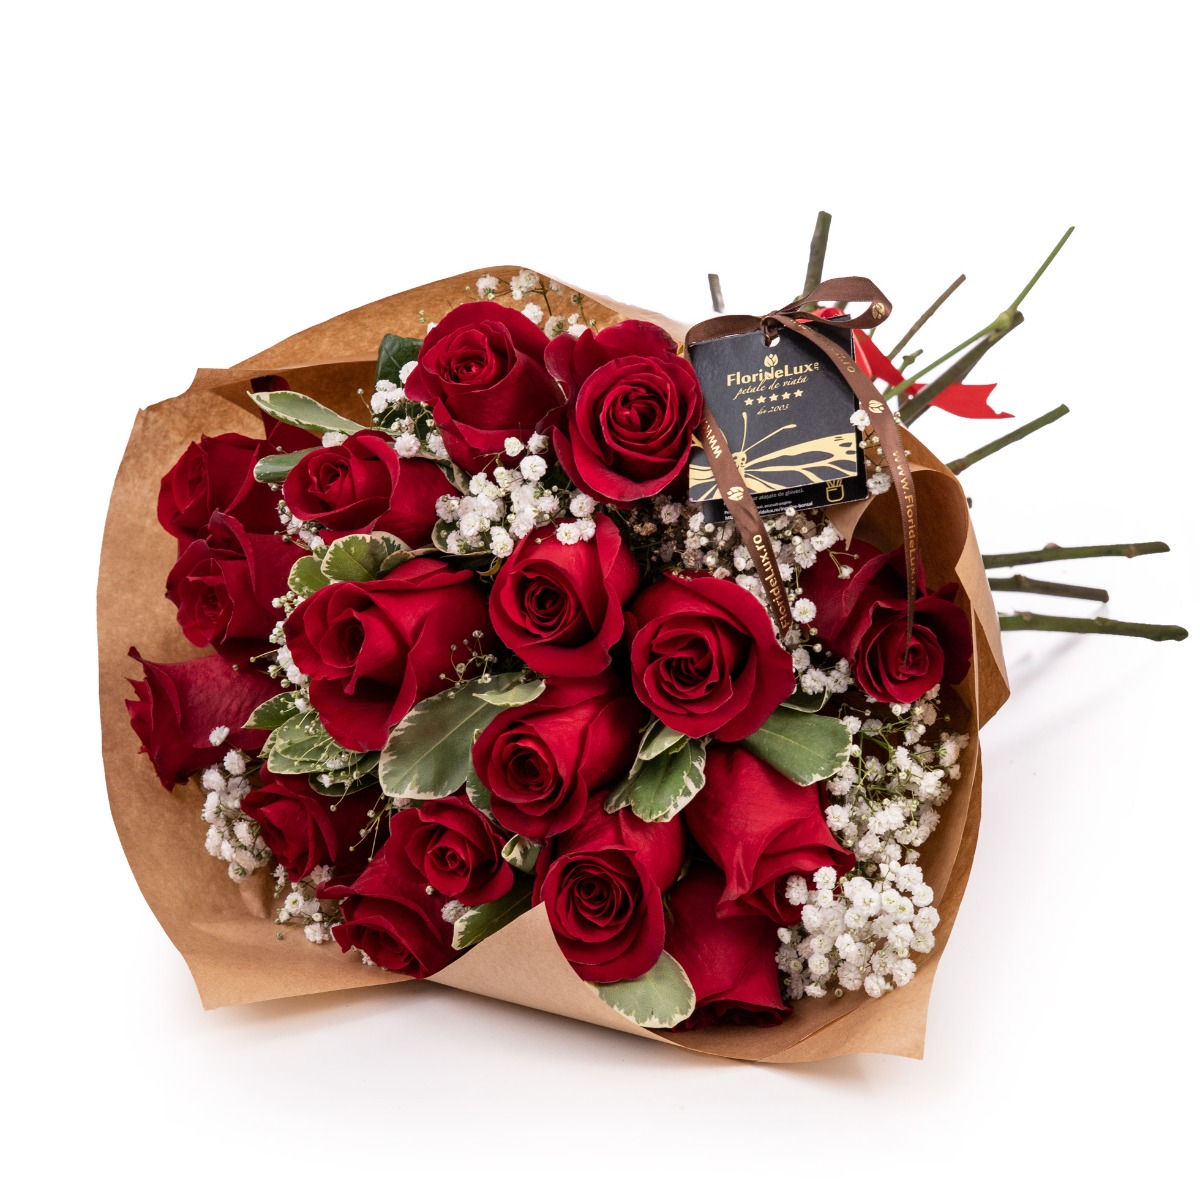 Buchet romantic trandafiri With You